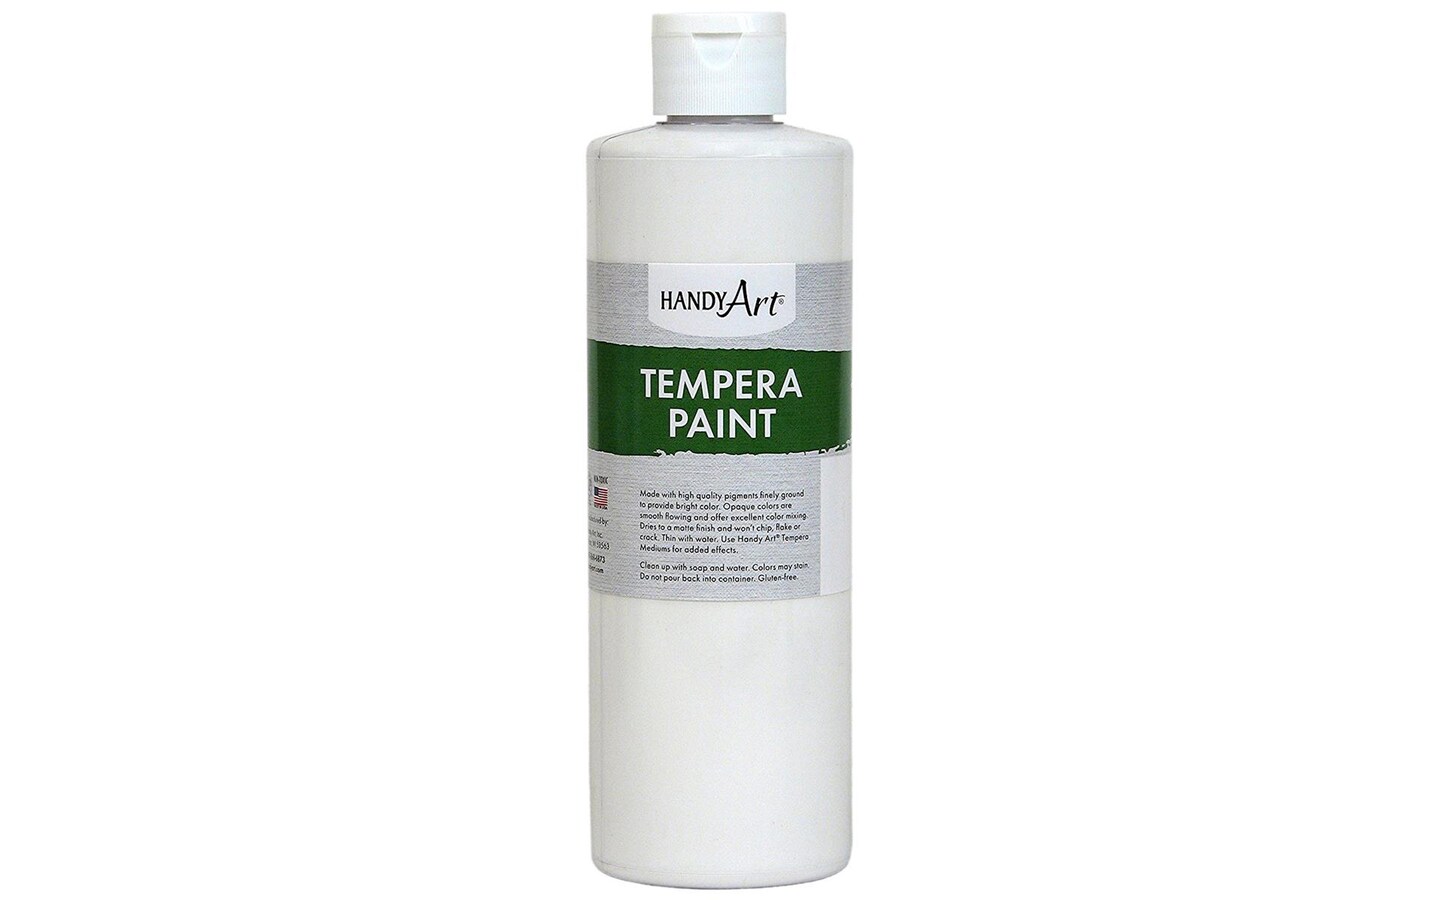 Handy Art Tempera Paint 8 oz. White